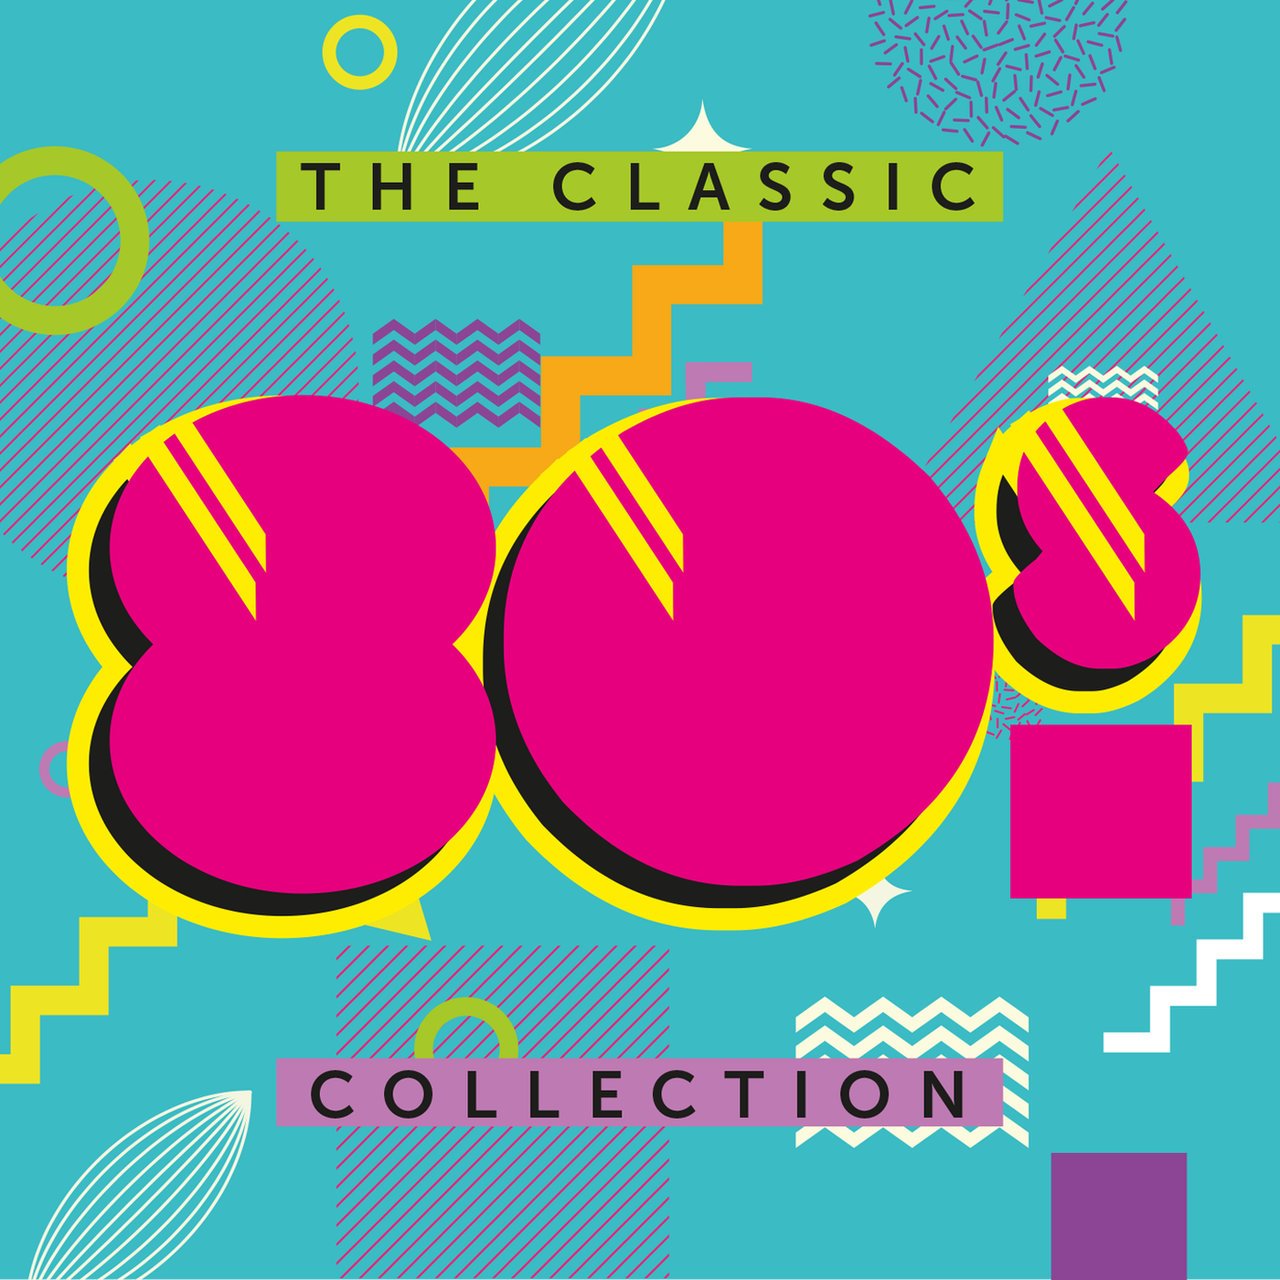 2017 flac. Collection Classic 80s. J Pop 80s. Disco 80s обложка альбома. Pop Rock Music 80s постеры.